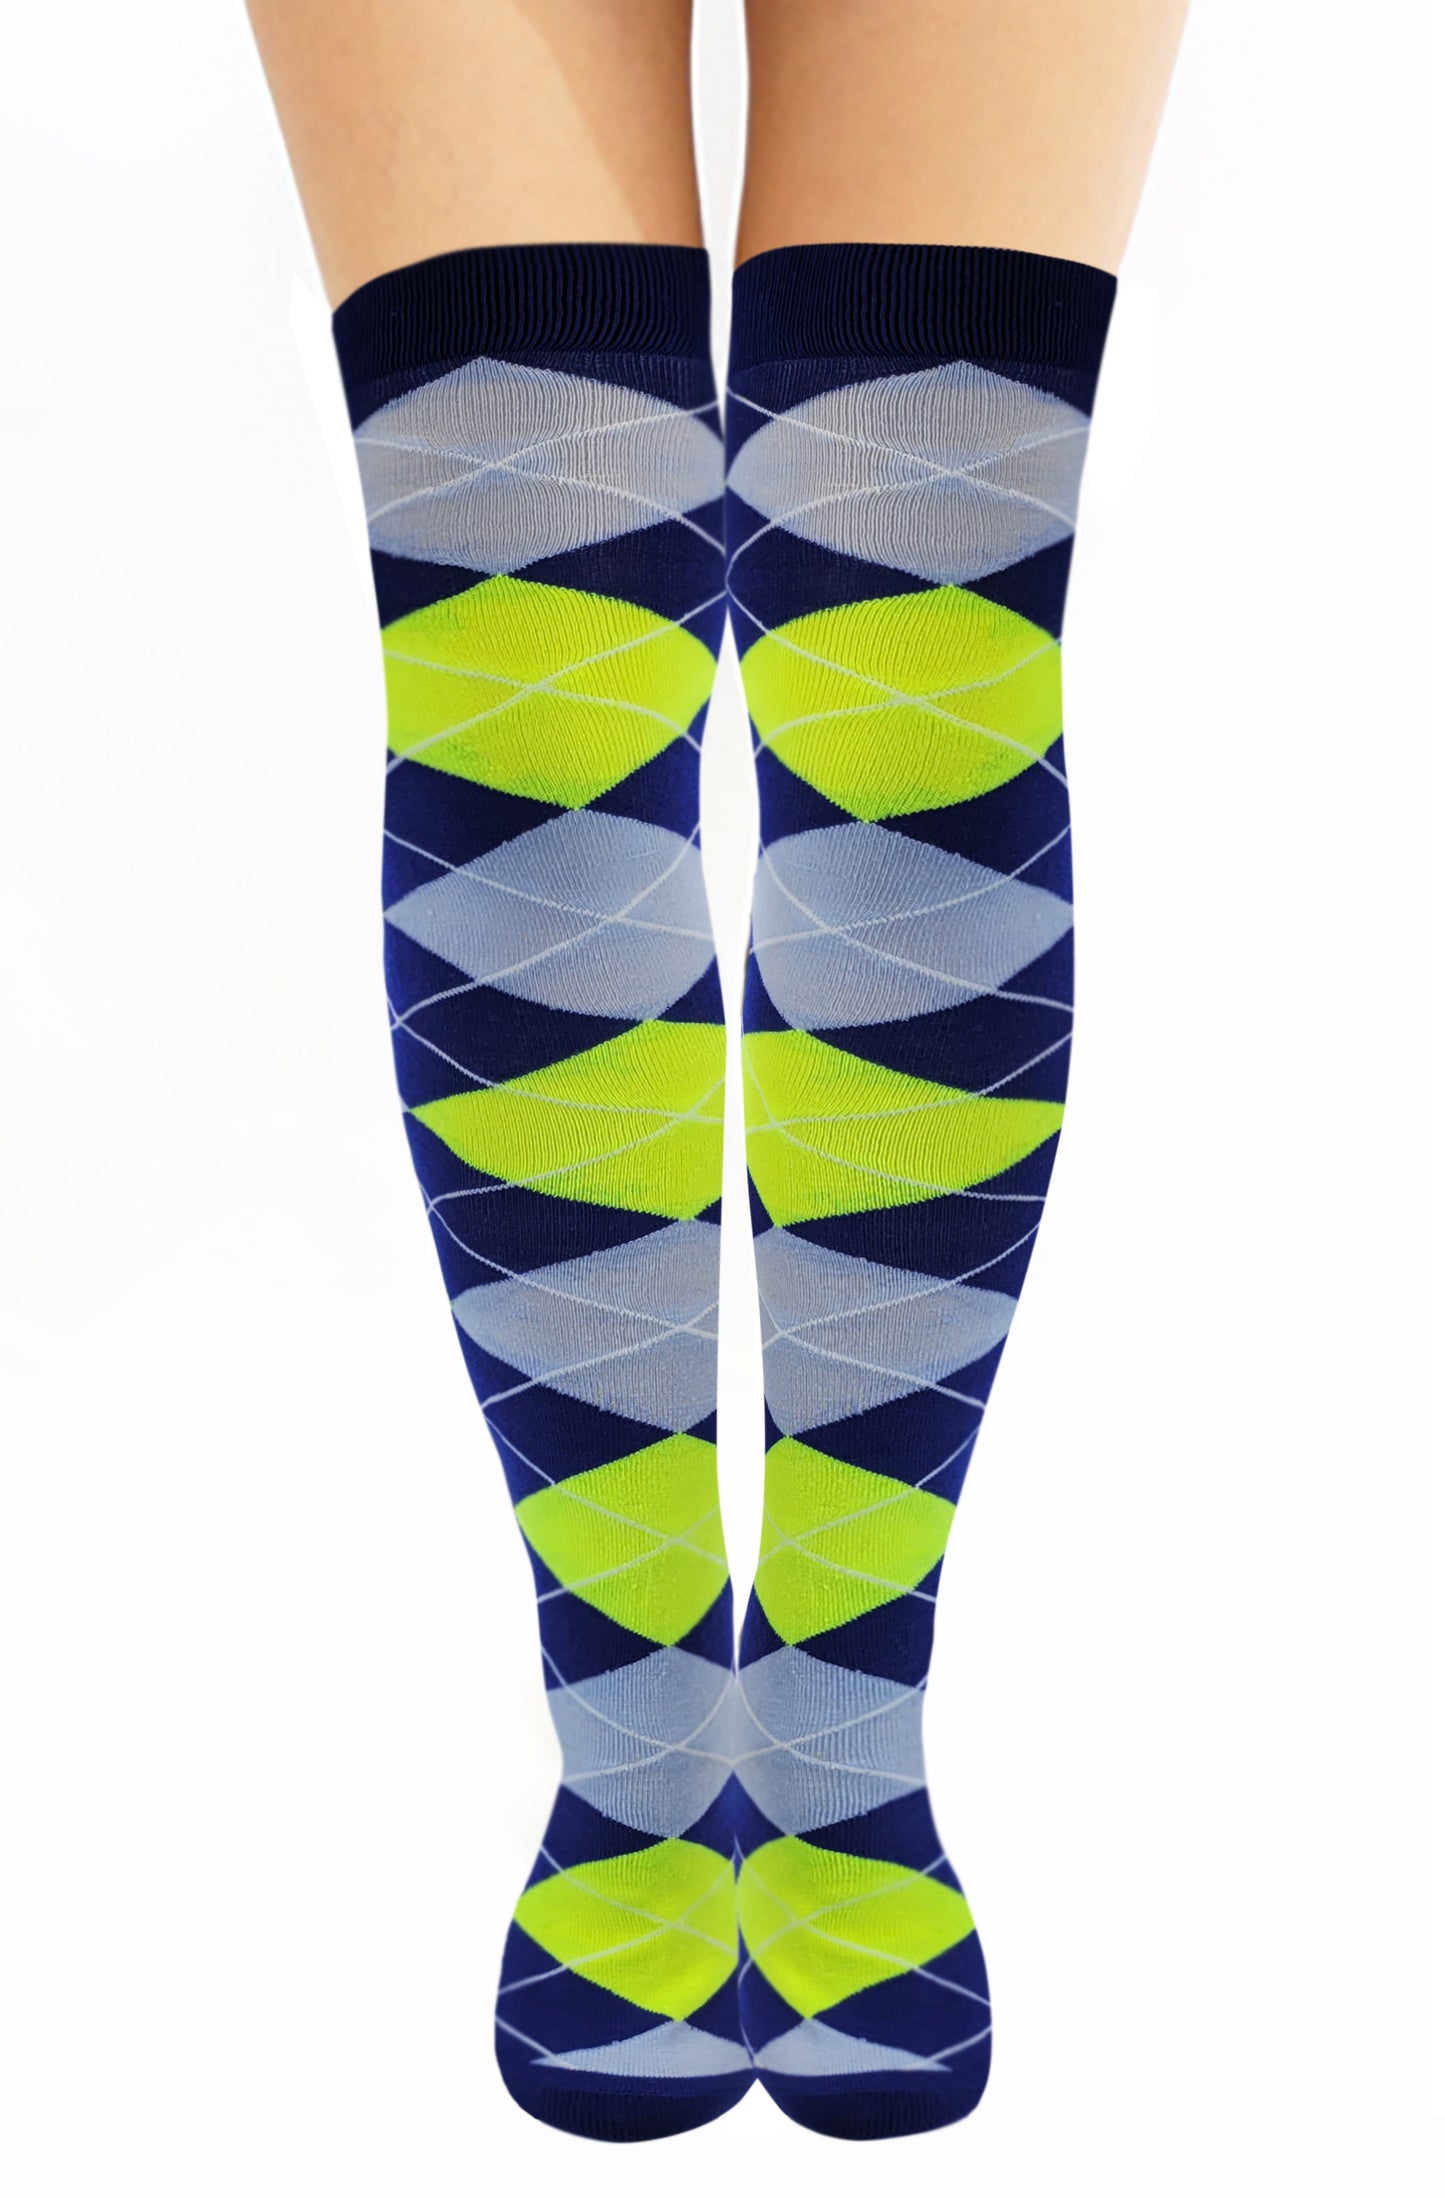 6 Pairs Pack Women Multi Argyle Design Thigh High Over the Knee Socks